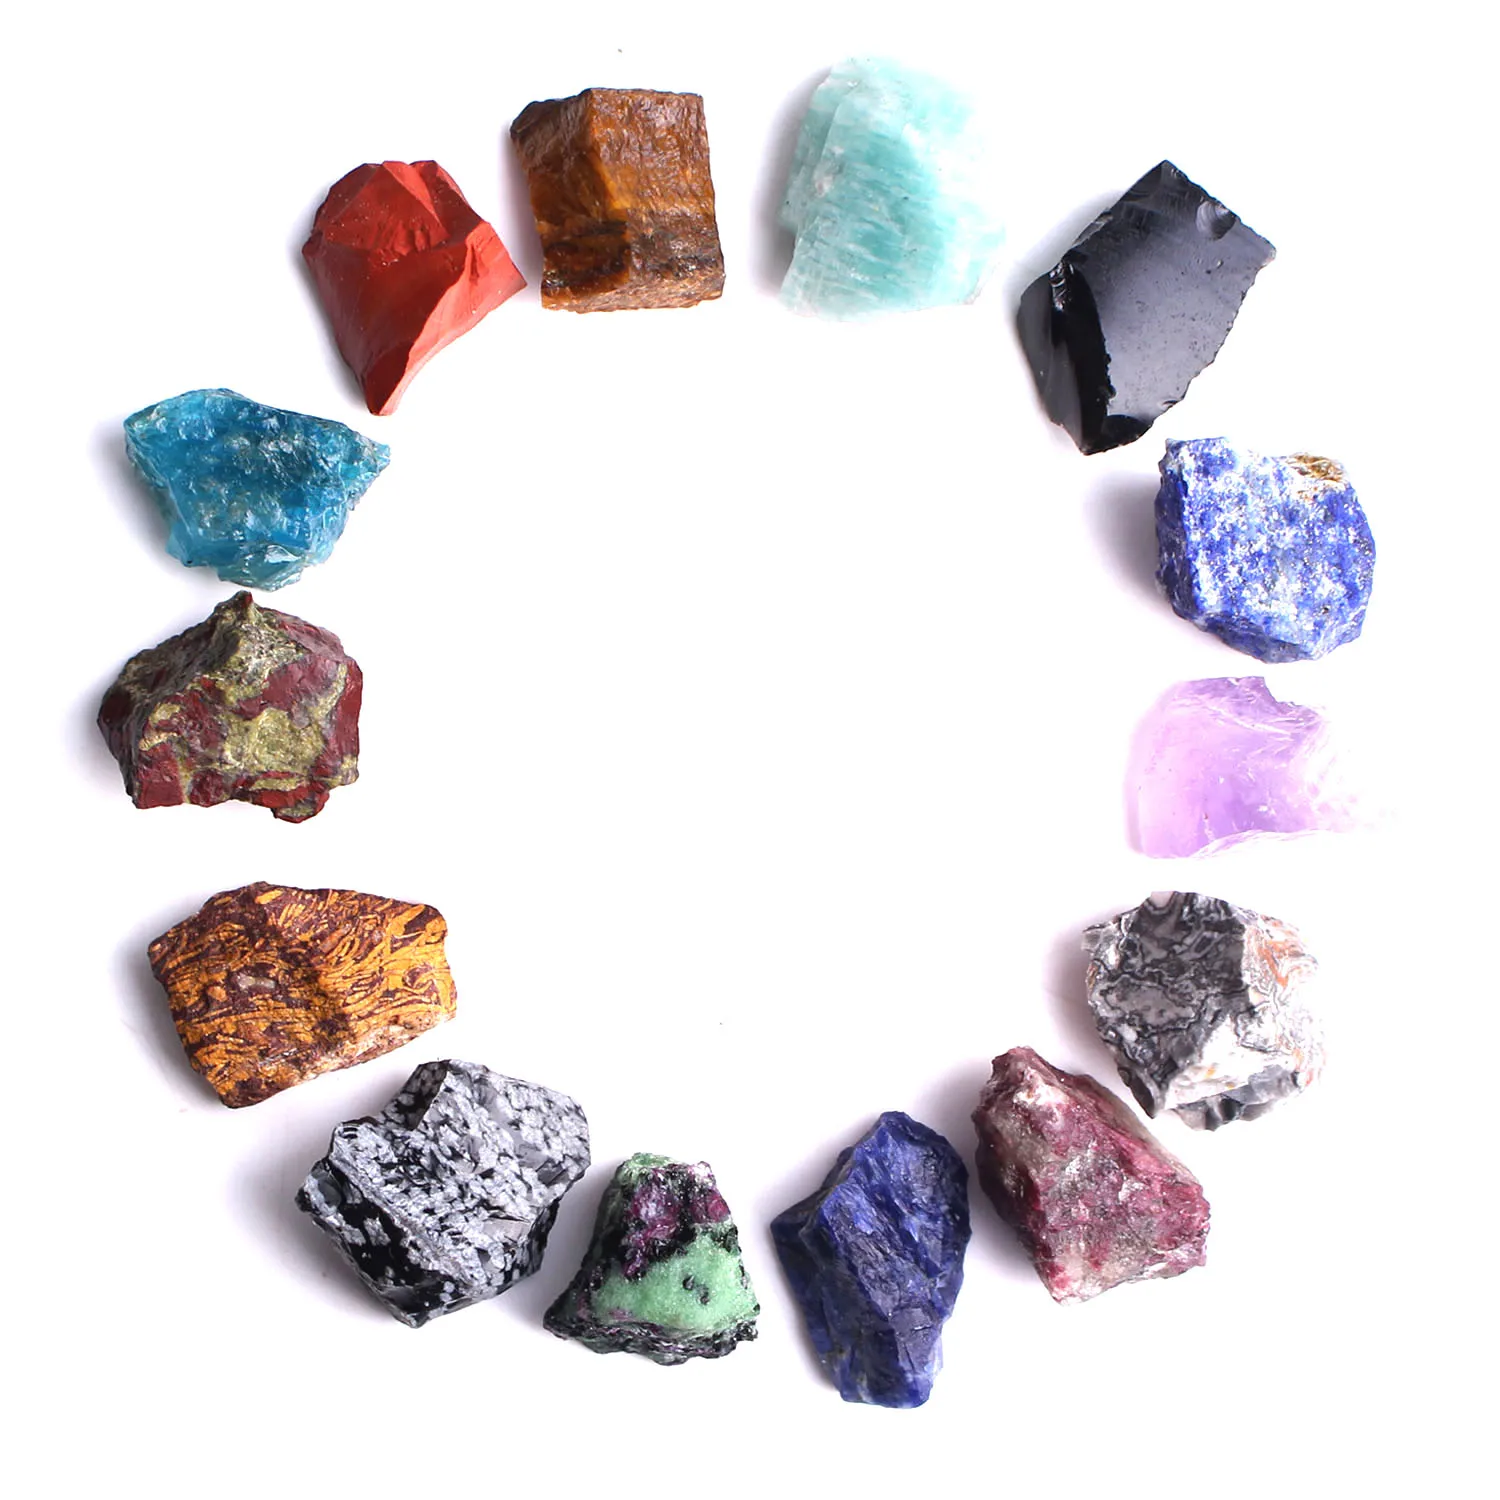 

1 Lot 14 Kinds of Crystal Tumbled Stone Colorful Rock Quartz Rough Minerals Specimen Mini Gemstone Reiki Chakra Decor gift